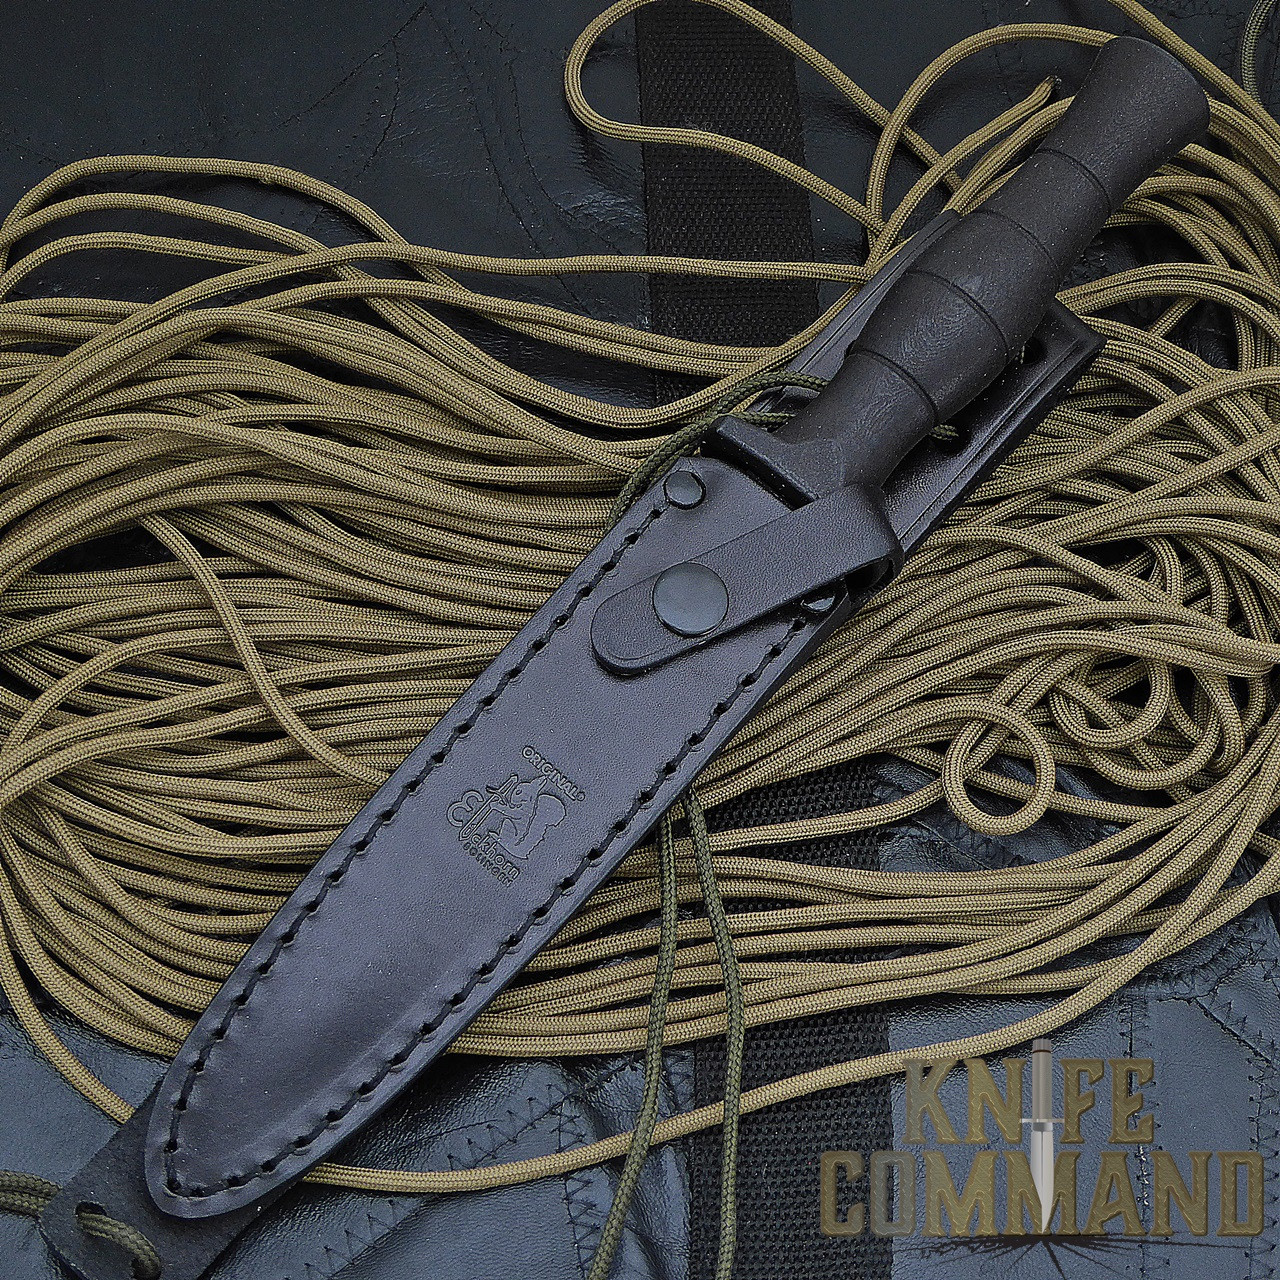 Eickhorn Solingen FS2014 Combat Dagger.   Nice black leather sheath.